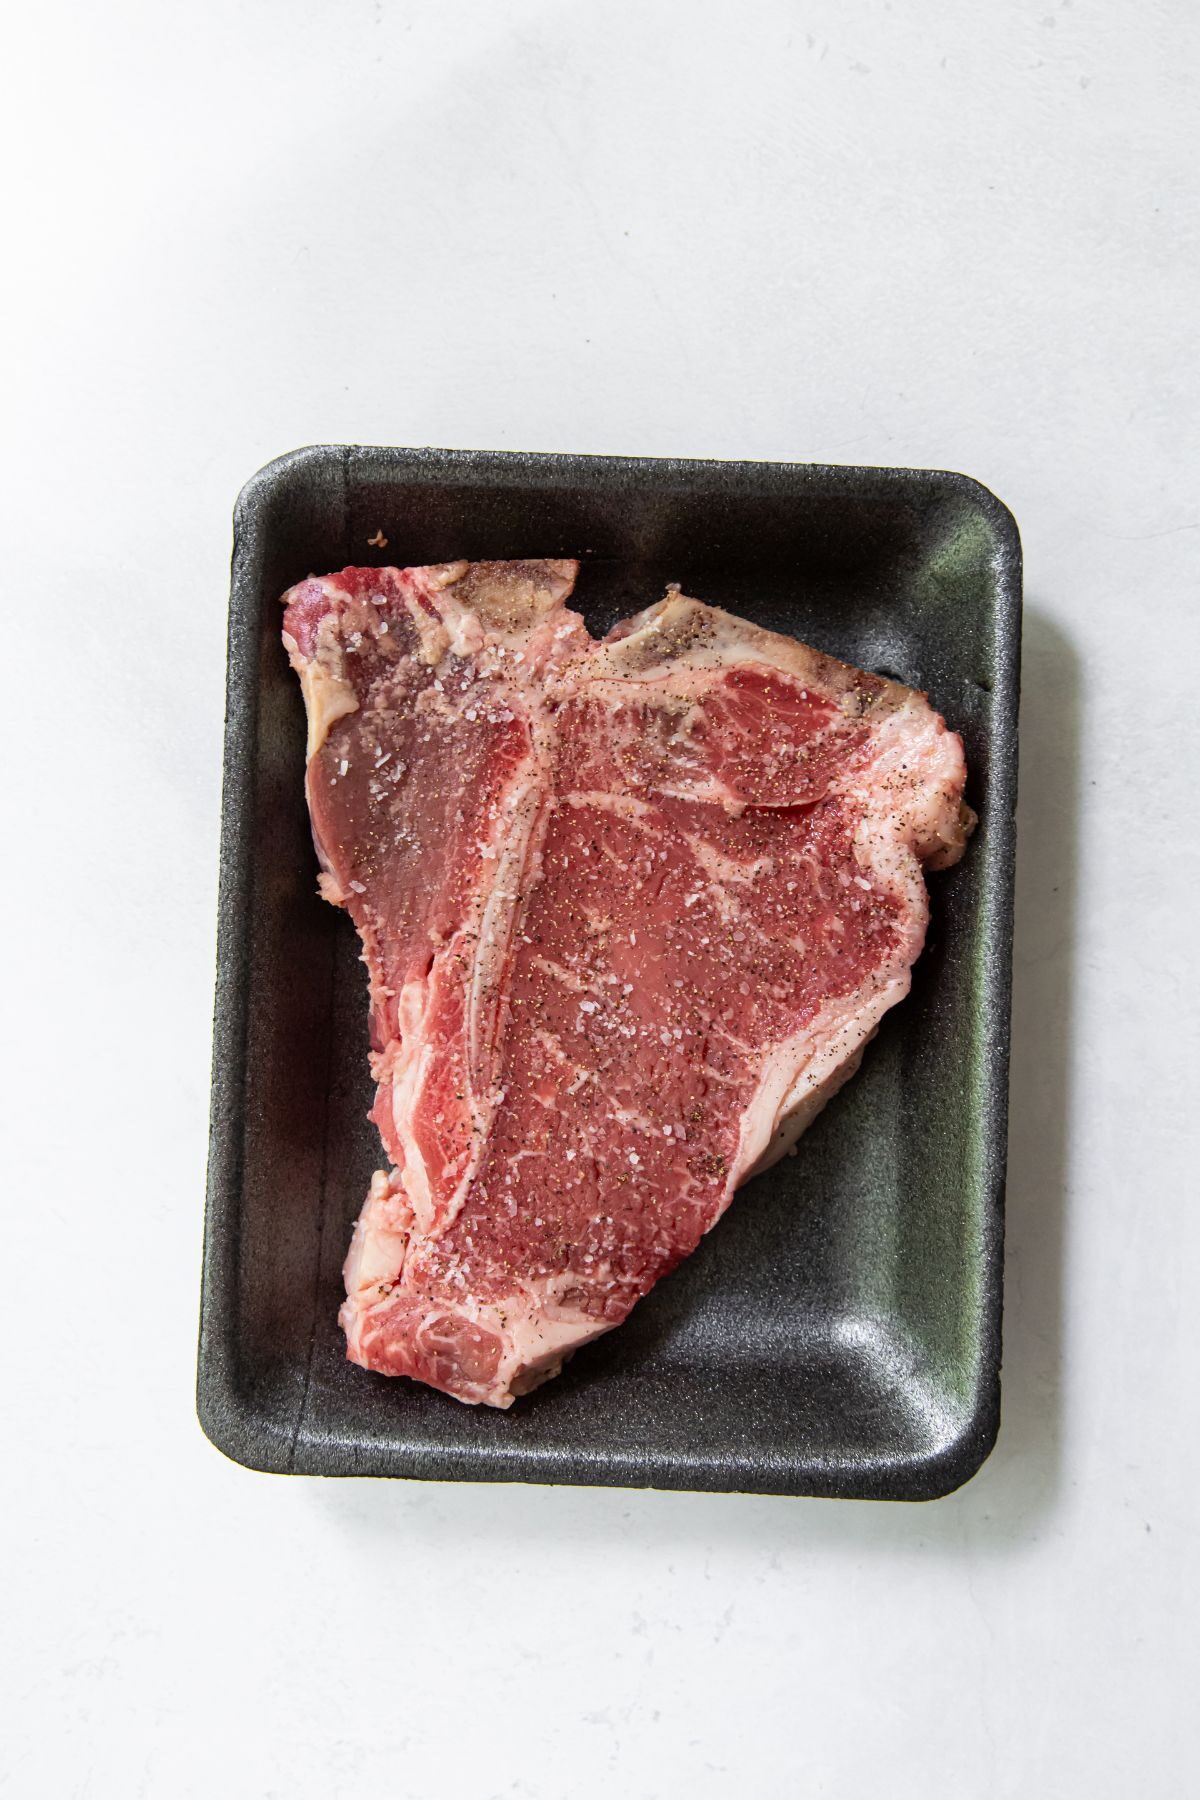 Flip the steak halfway through the cooking process